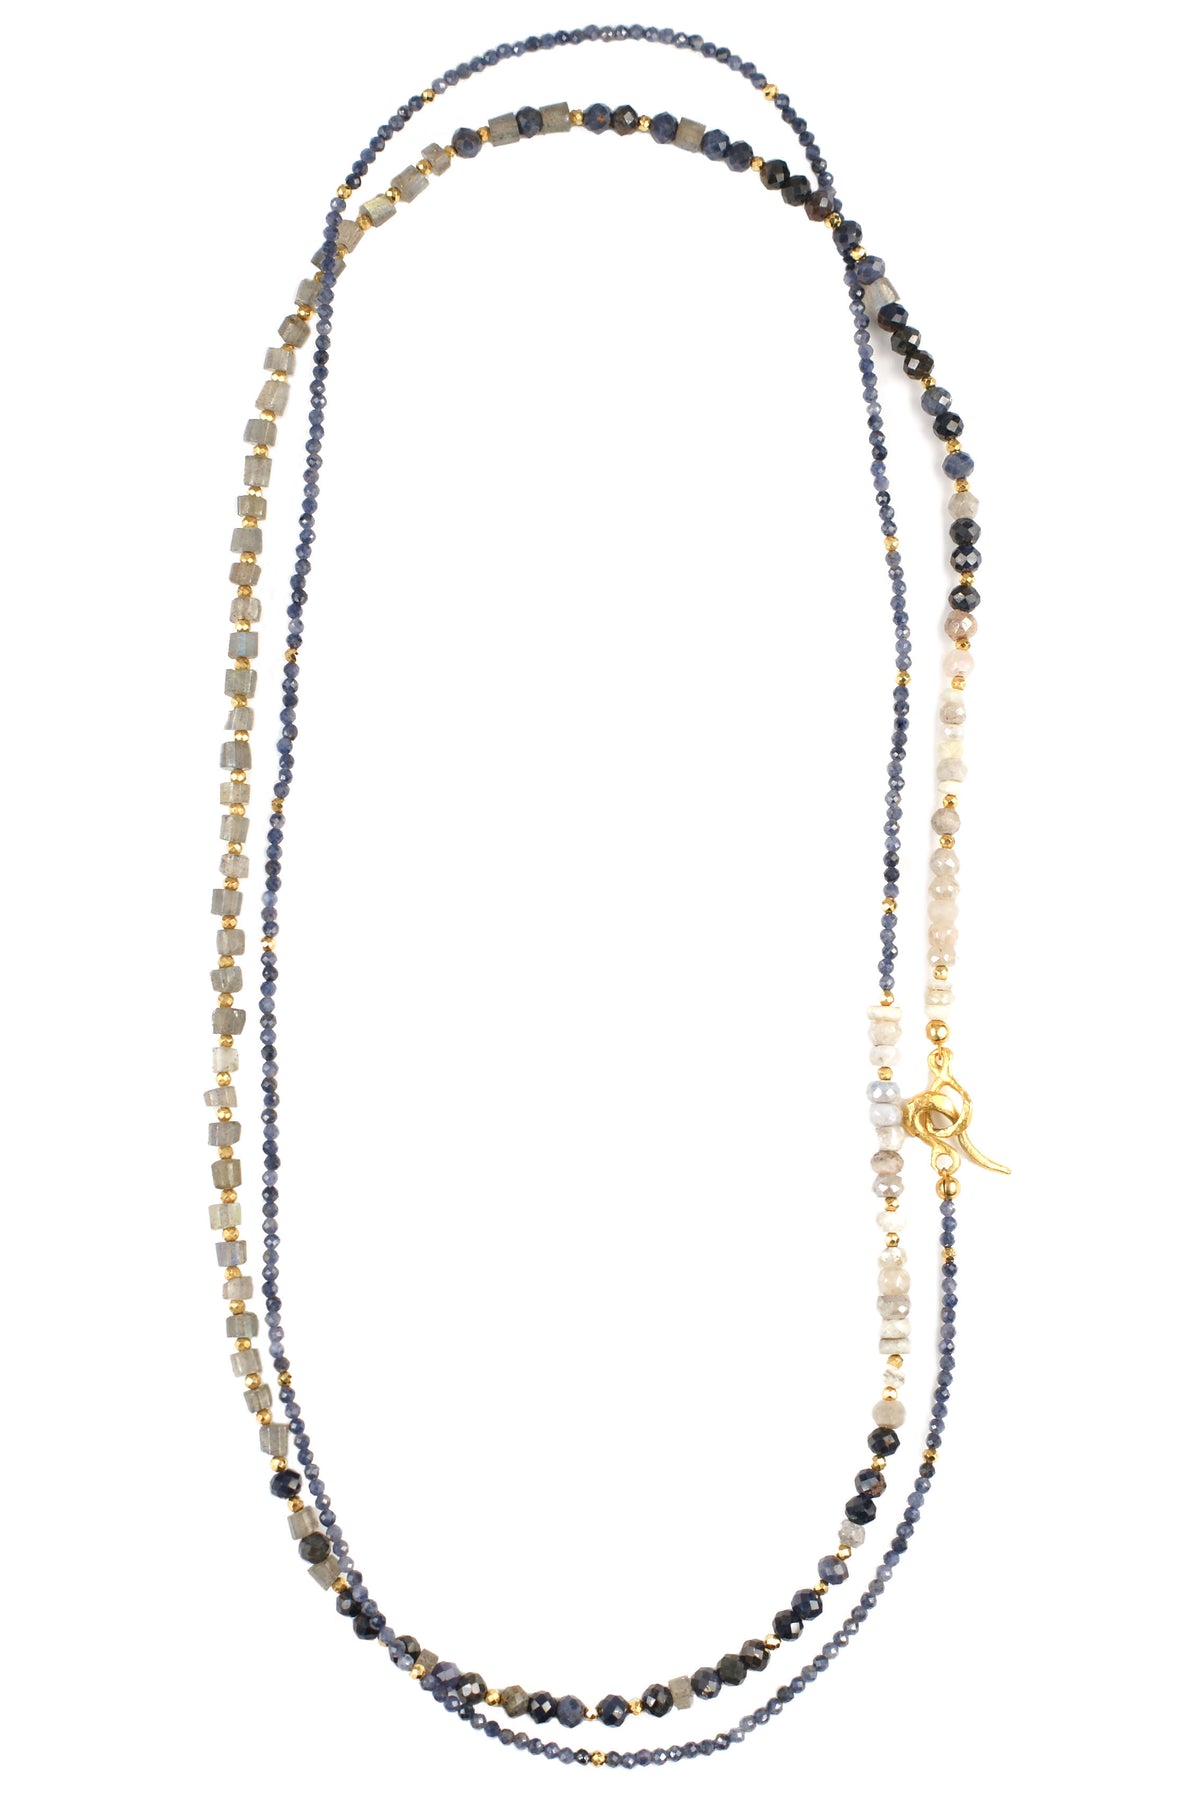 Sapphire, Silverite and Labradorite Layering Necklace